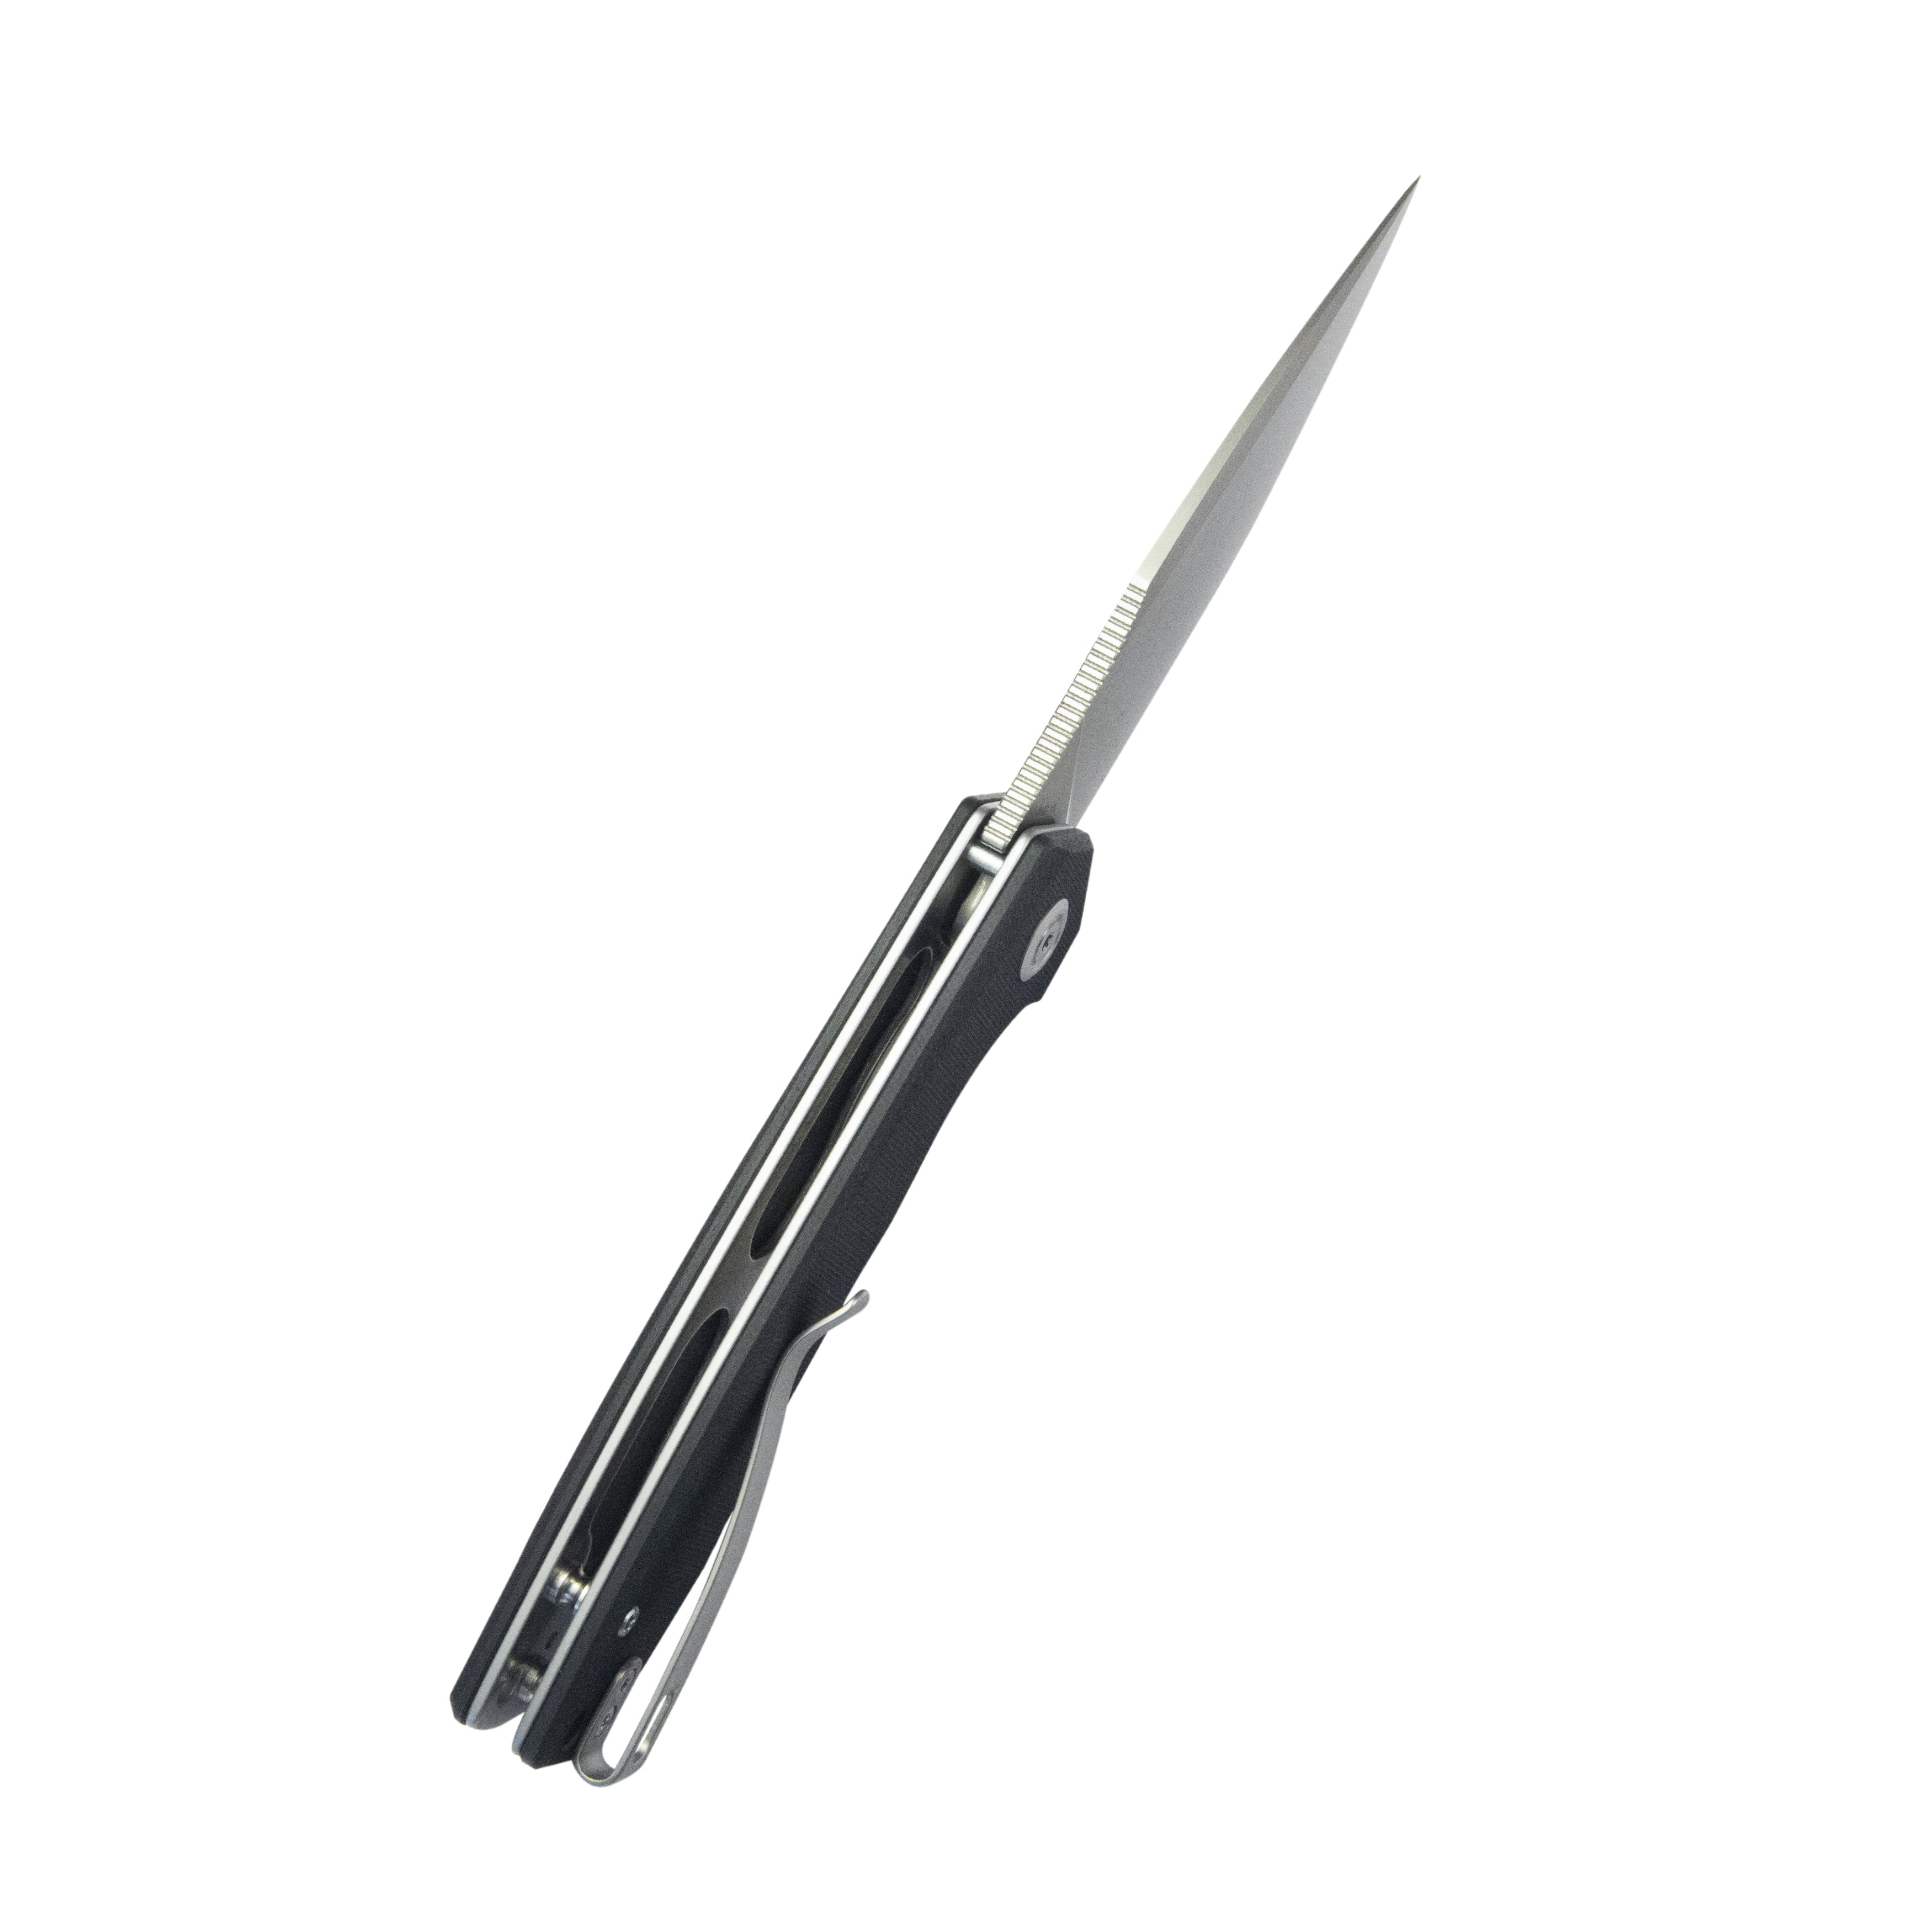 Kubey Calyce Liner Lock Flipper Folding Knife Black G10 Handle 3.27" Bead Blasted AUS-10 KU901K